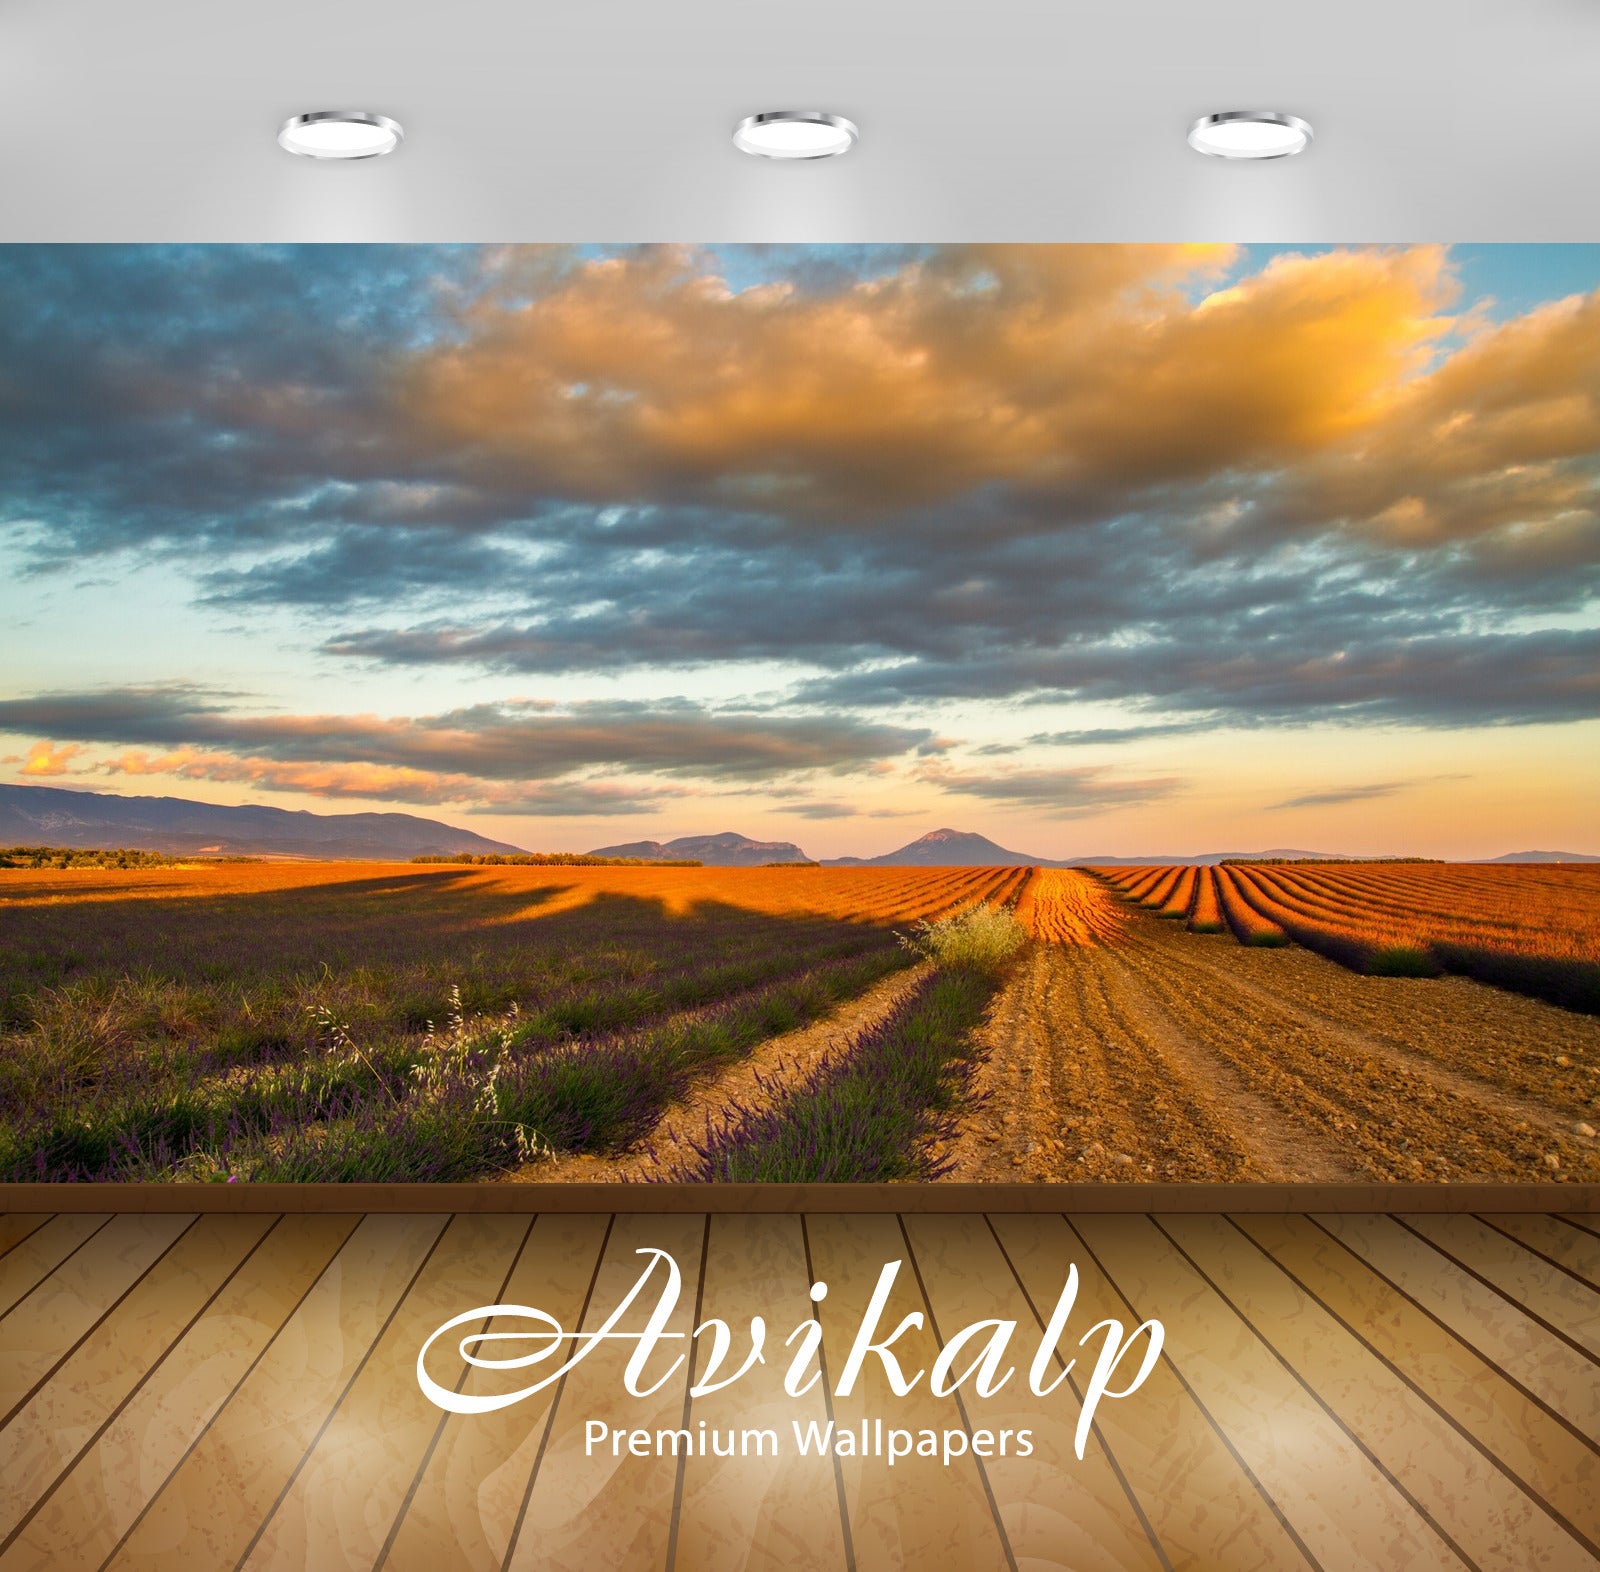 Avikalp Exclusive Awi1806 Beautiful Sunrays Farm Nature Full HD Wallpapers for Living room, Hall, Ki